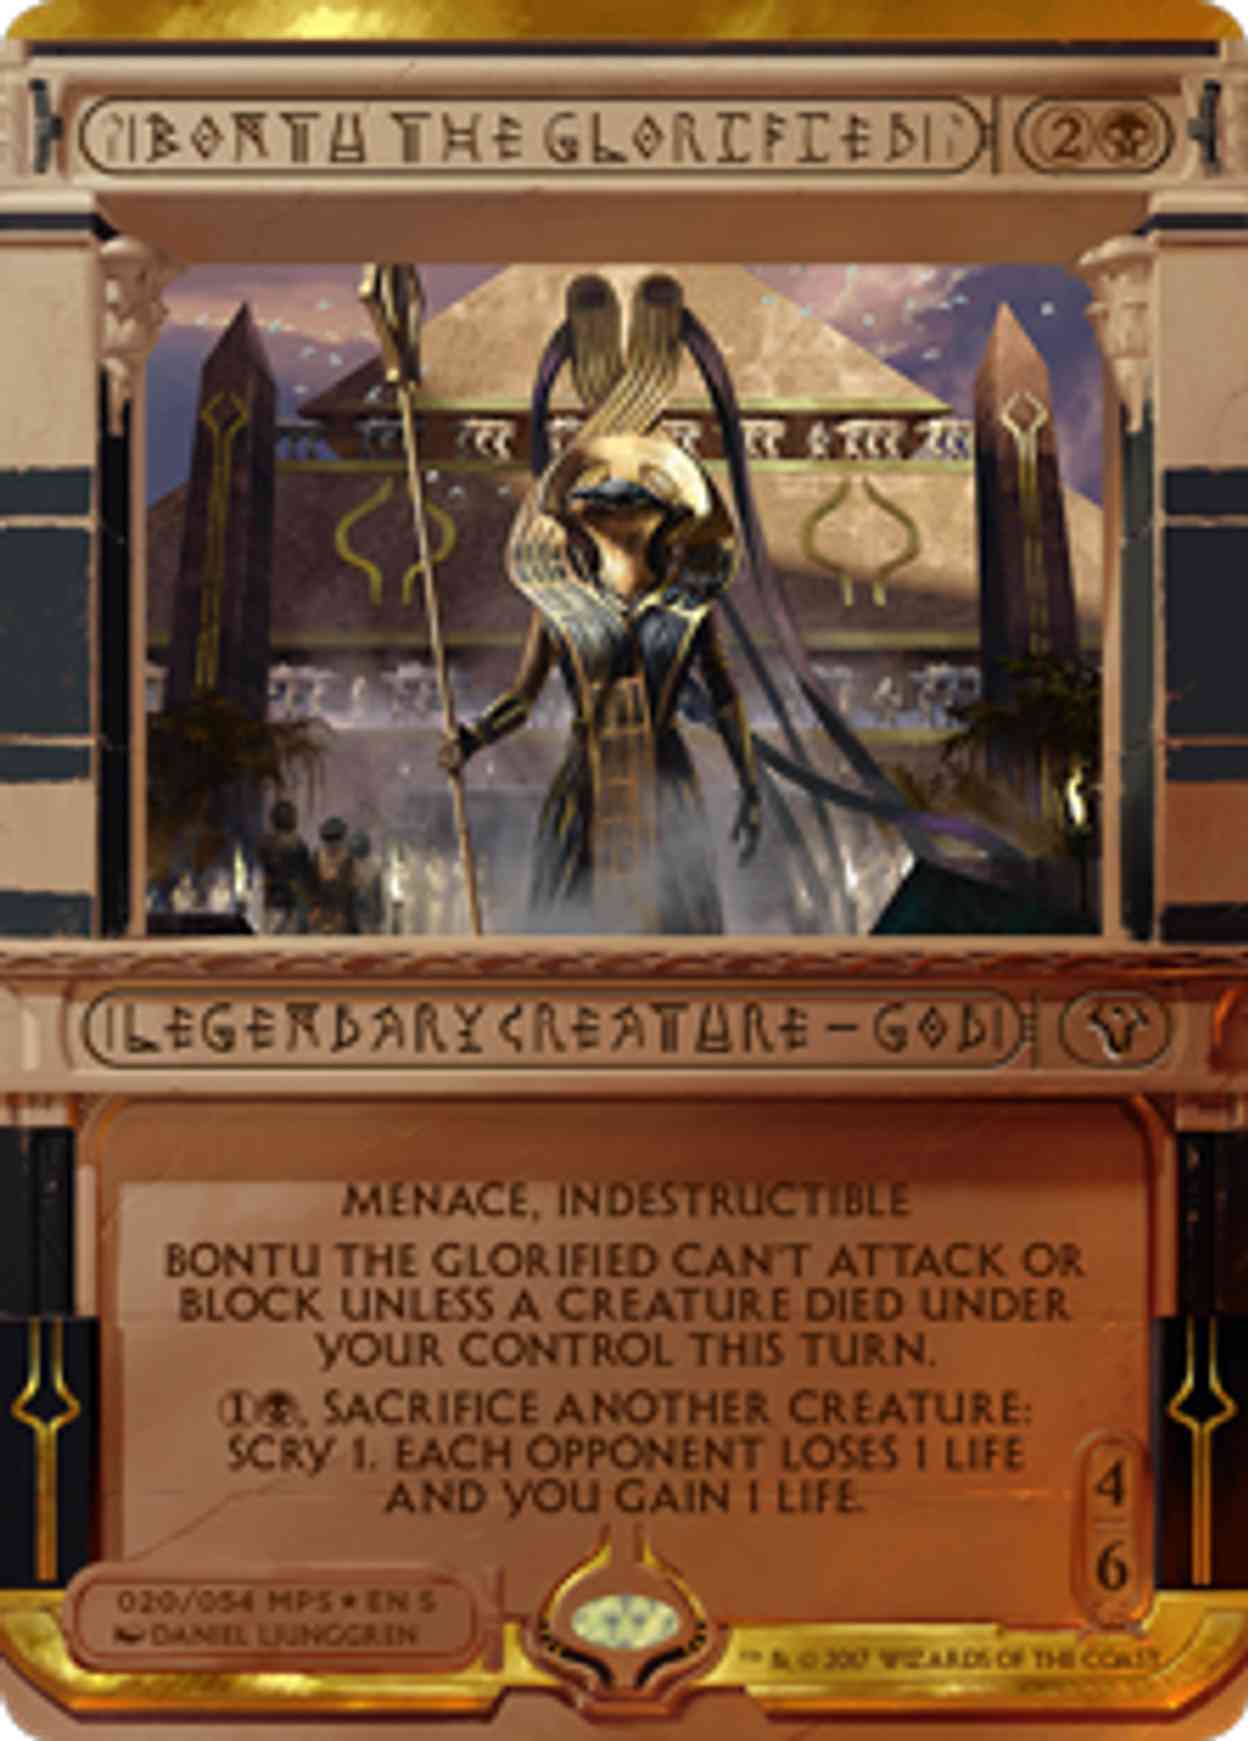 Bontu the Glorified magic card front